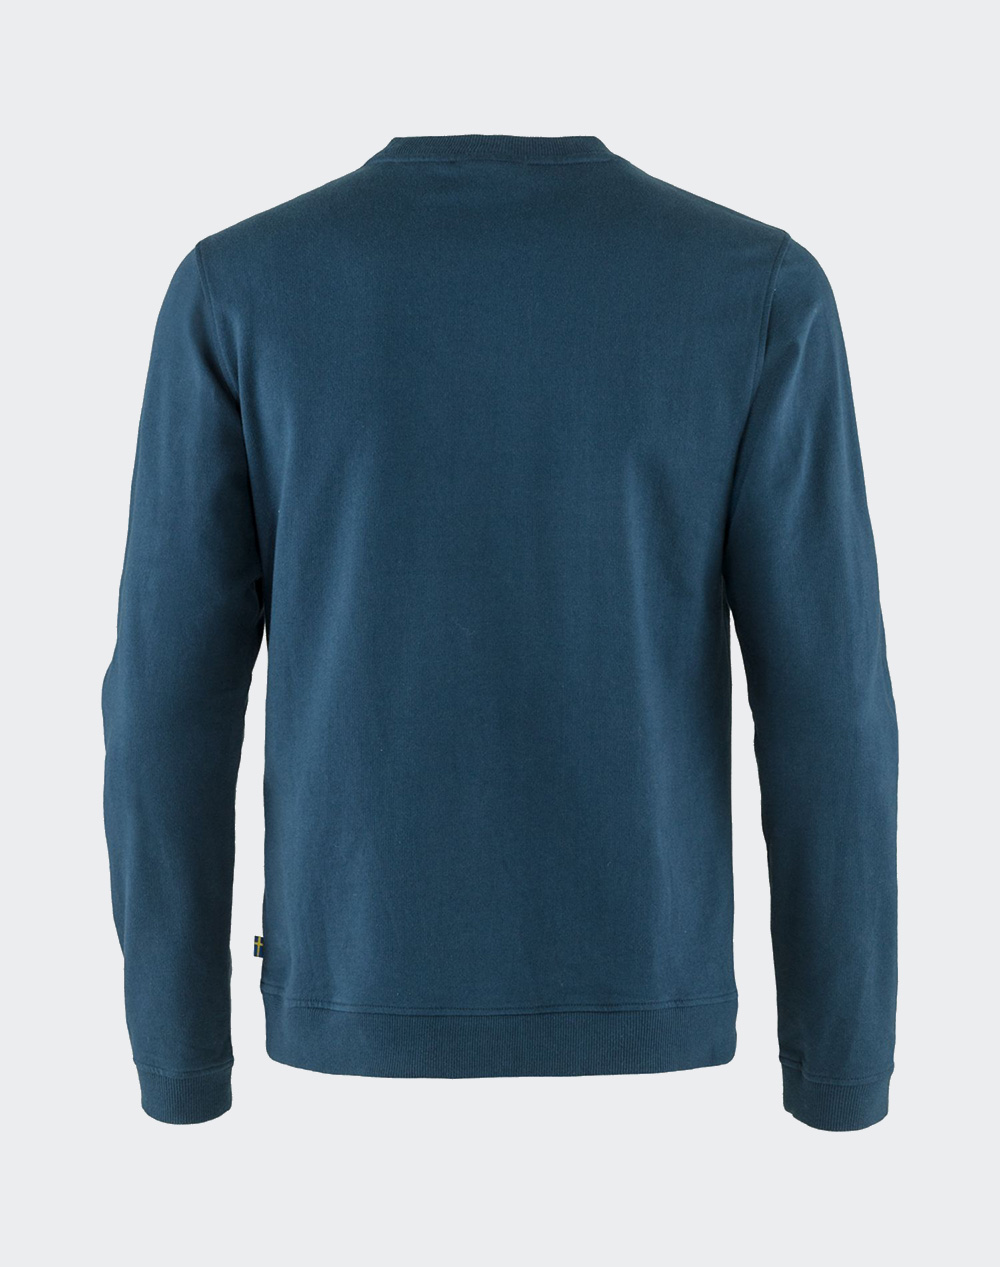 FJALLRAVEN Vardag Sweater M / Vardag Sweater M